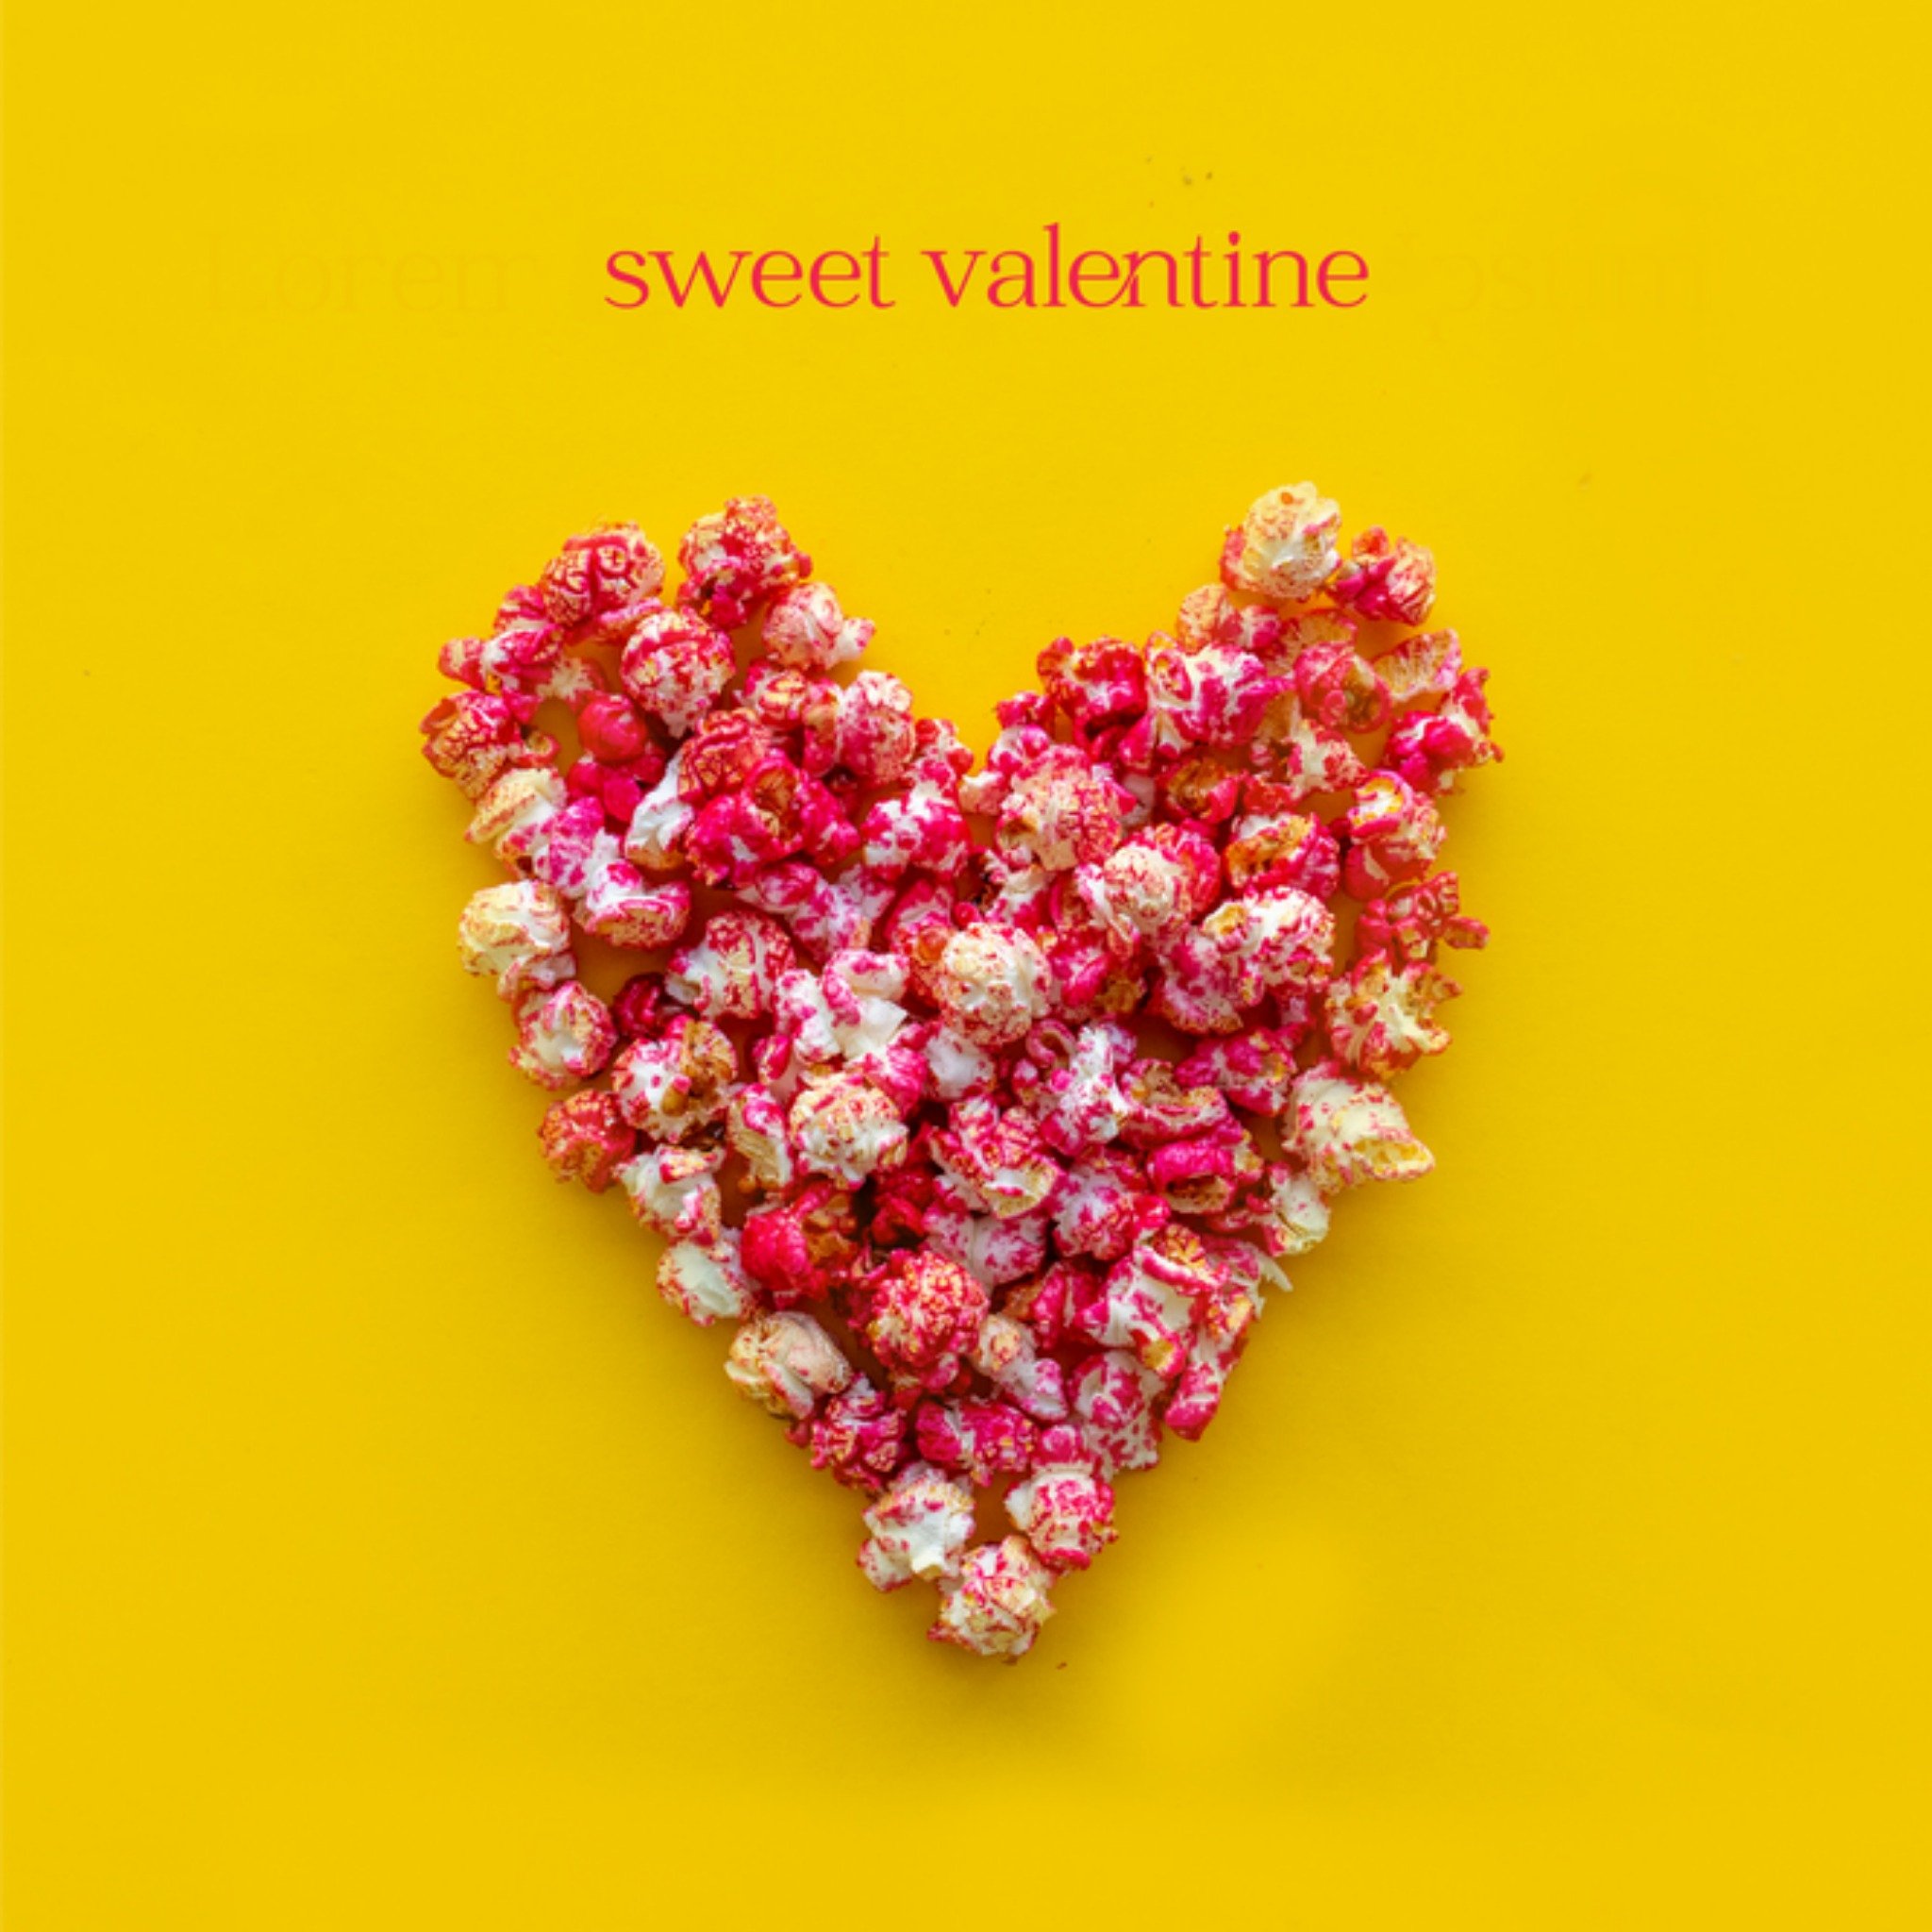 Photoflash - Valentijnskaart - Sweet valentine